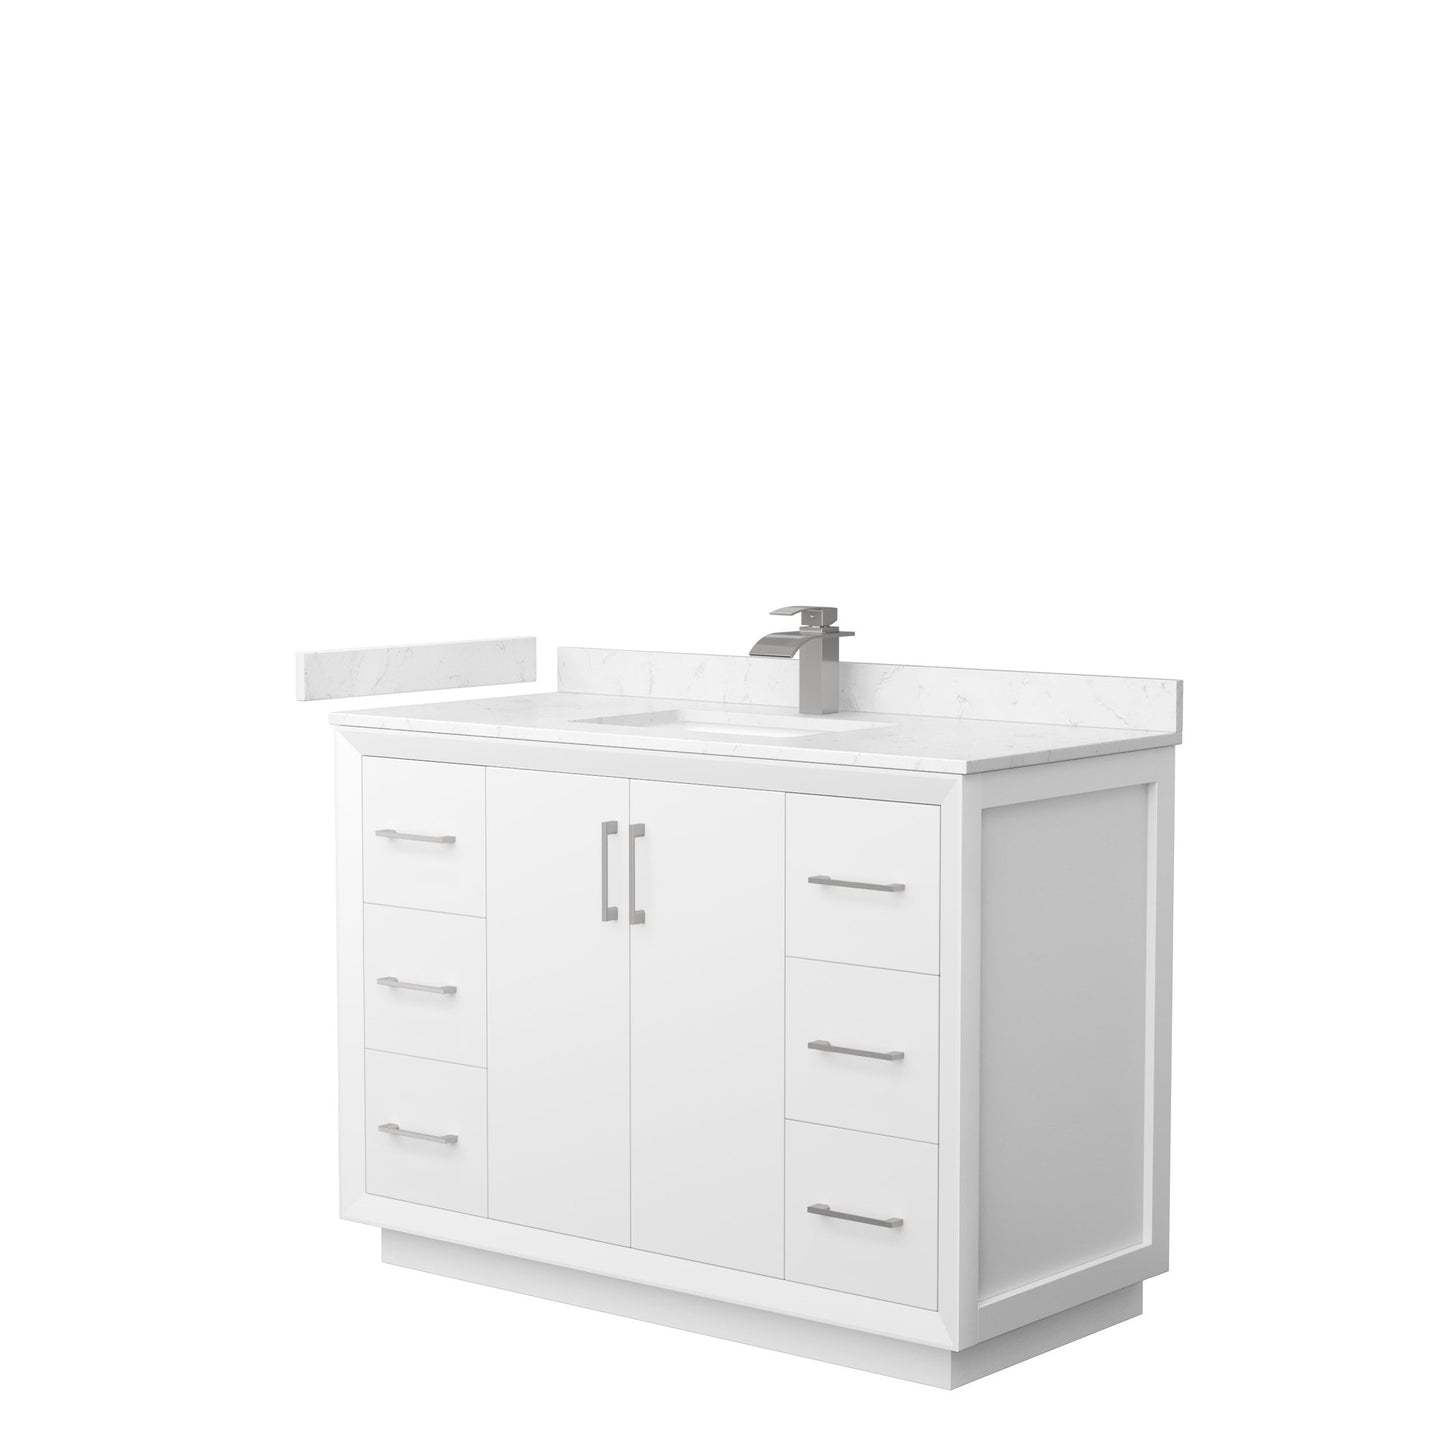 Wyndham Collection Strada 48" Single Bathroom Vanity in White, Carrara Cultured Marble Countertop, Undermount Square Sink, Brushed Nickel Trim